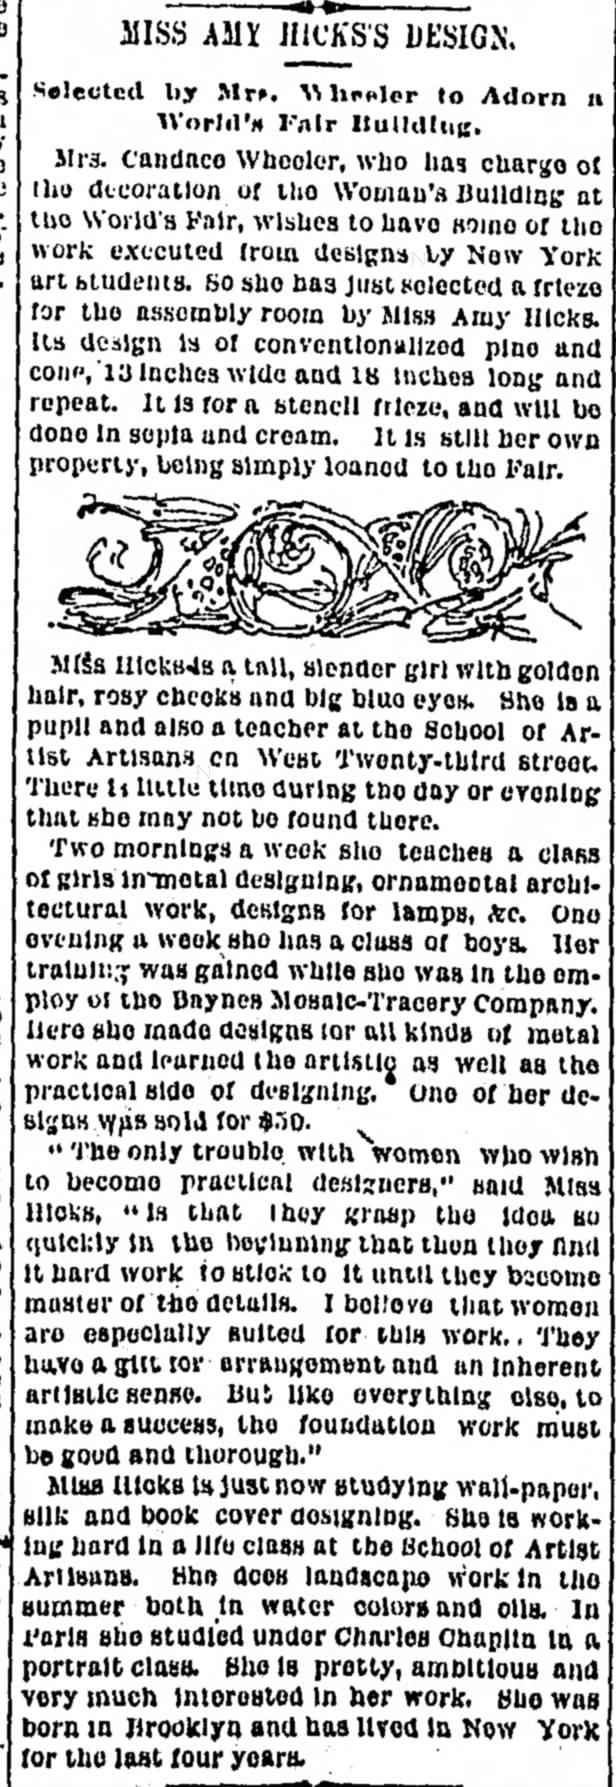 Miss Amy Hick's Design. The World (New York, New York) 8 April 1893, p 8